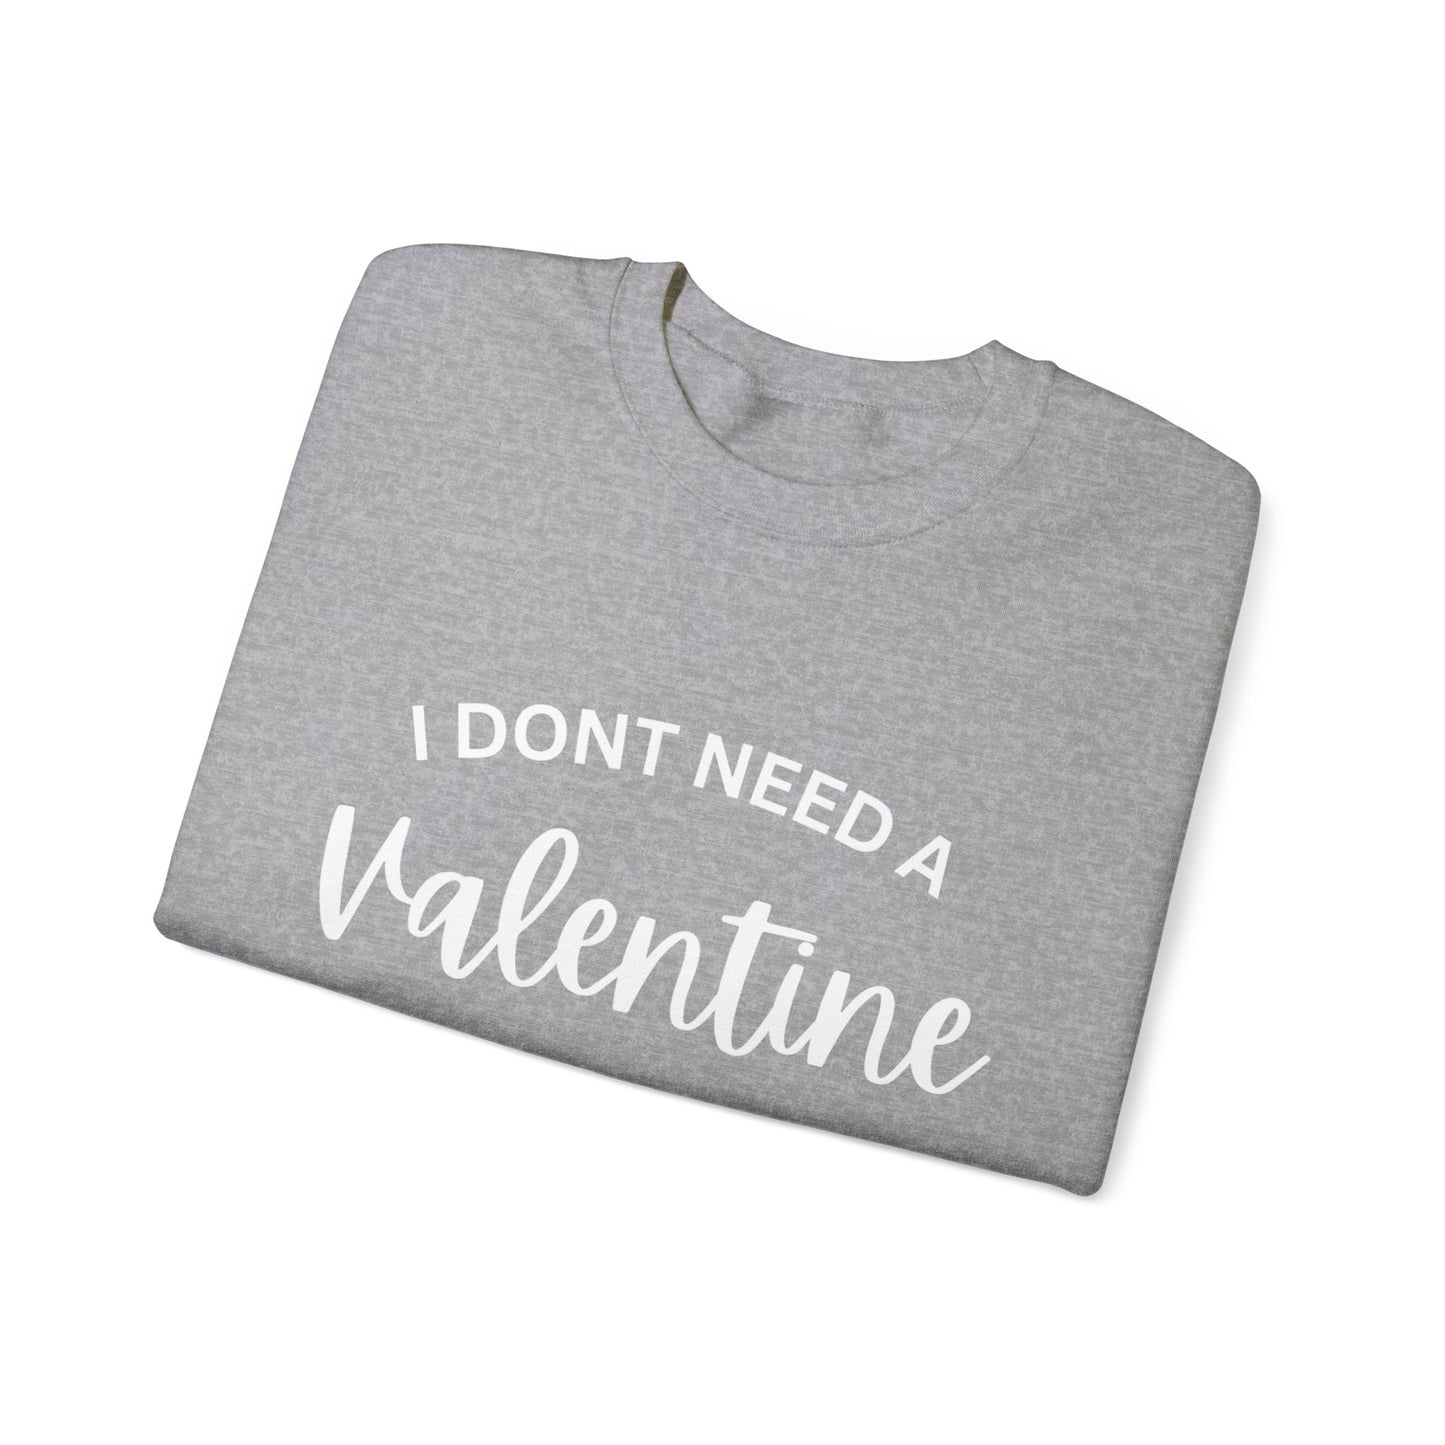 I dont need a Valentine I need a nap Crewneck Sweatshirt